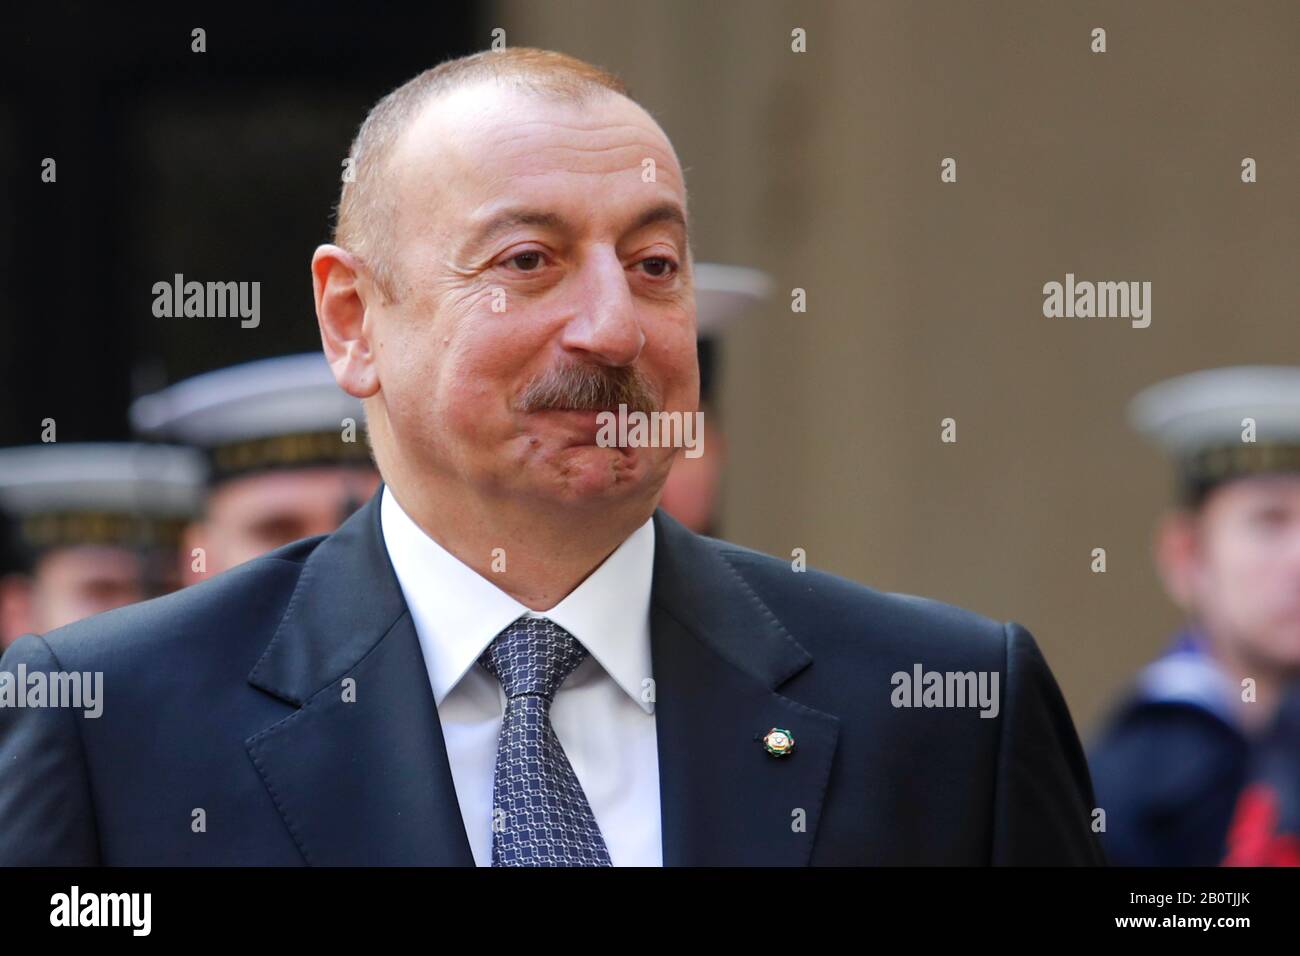 Italy, Rome, february 20, 2020 : Italian Premier Giuseppe Conte meets Azerbaijani President Ilham Aliyev at Chigi Palace. Pictured Ilham Aliyev   Phot Stock Photo